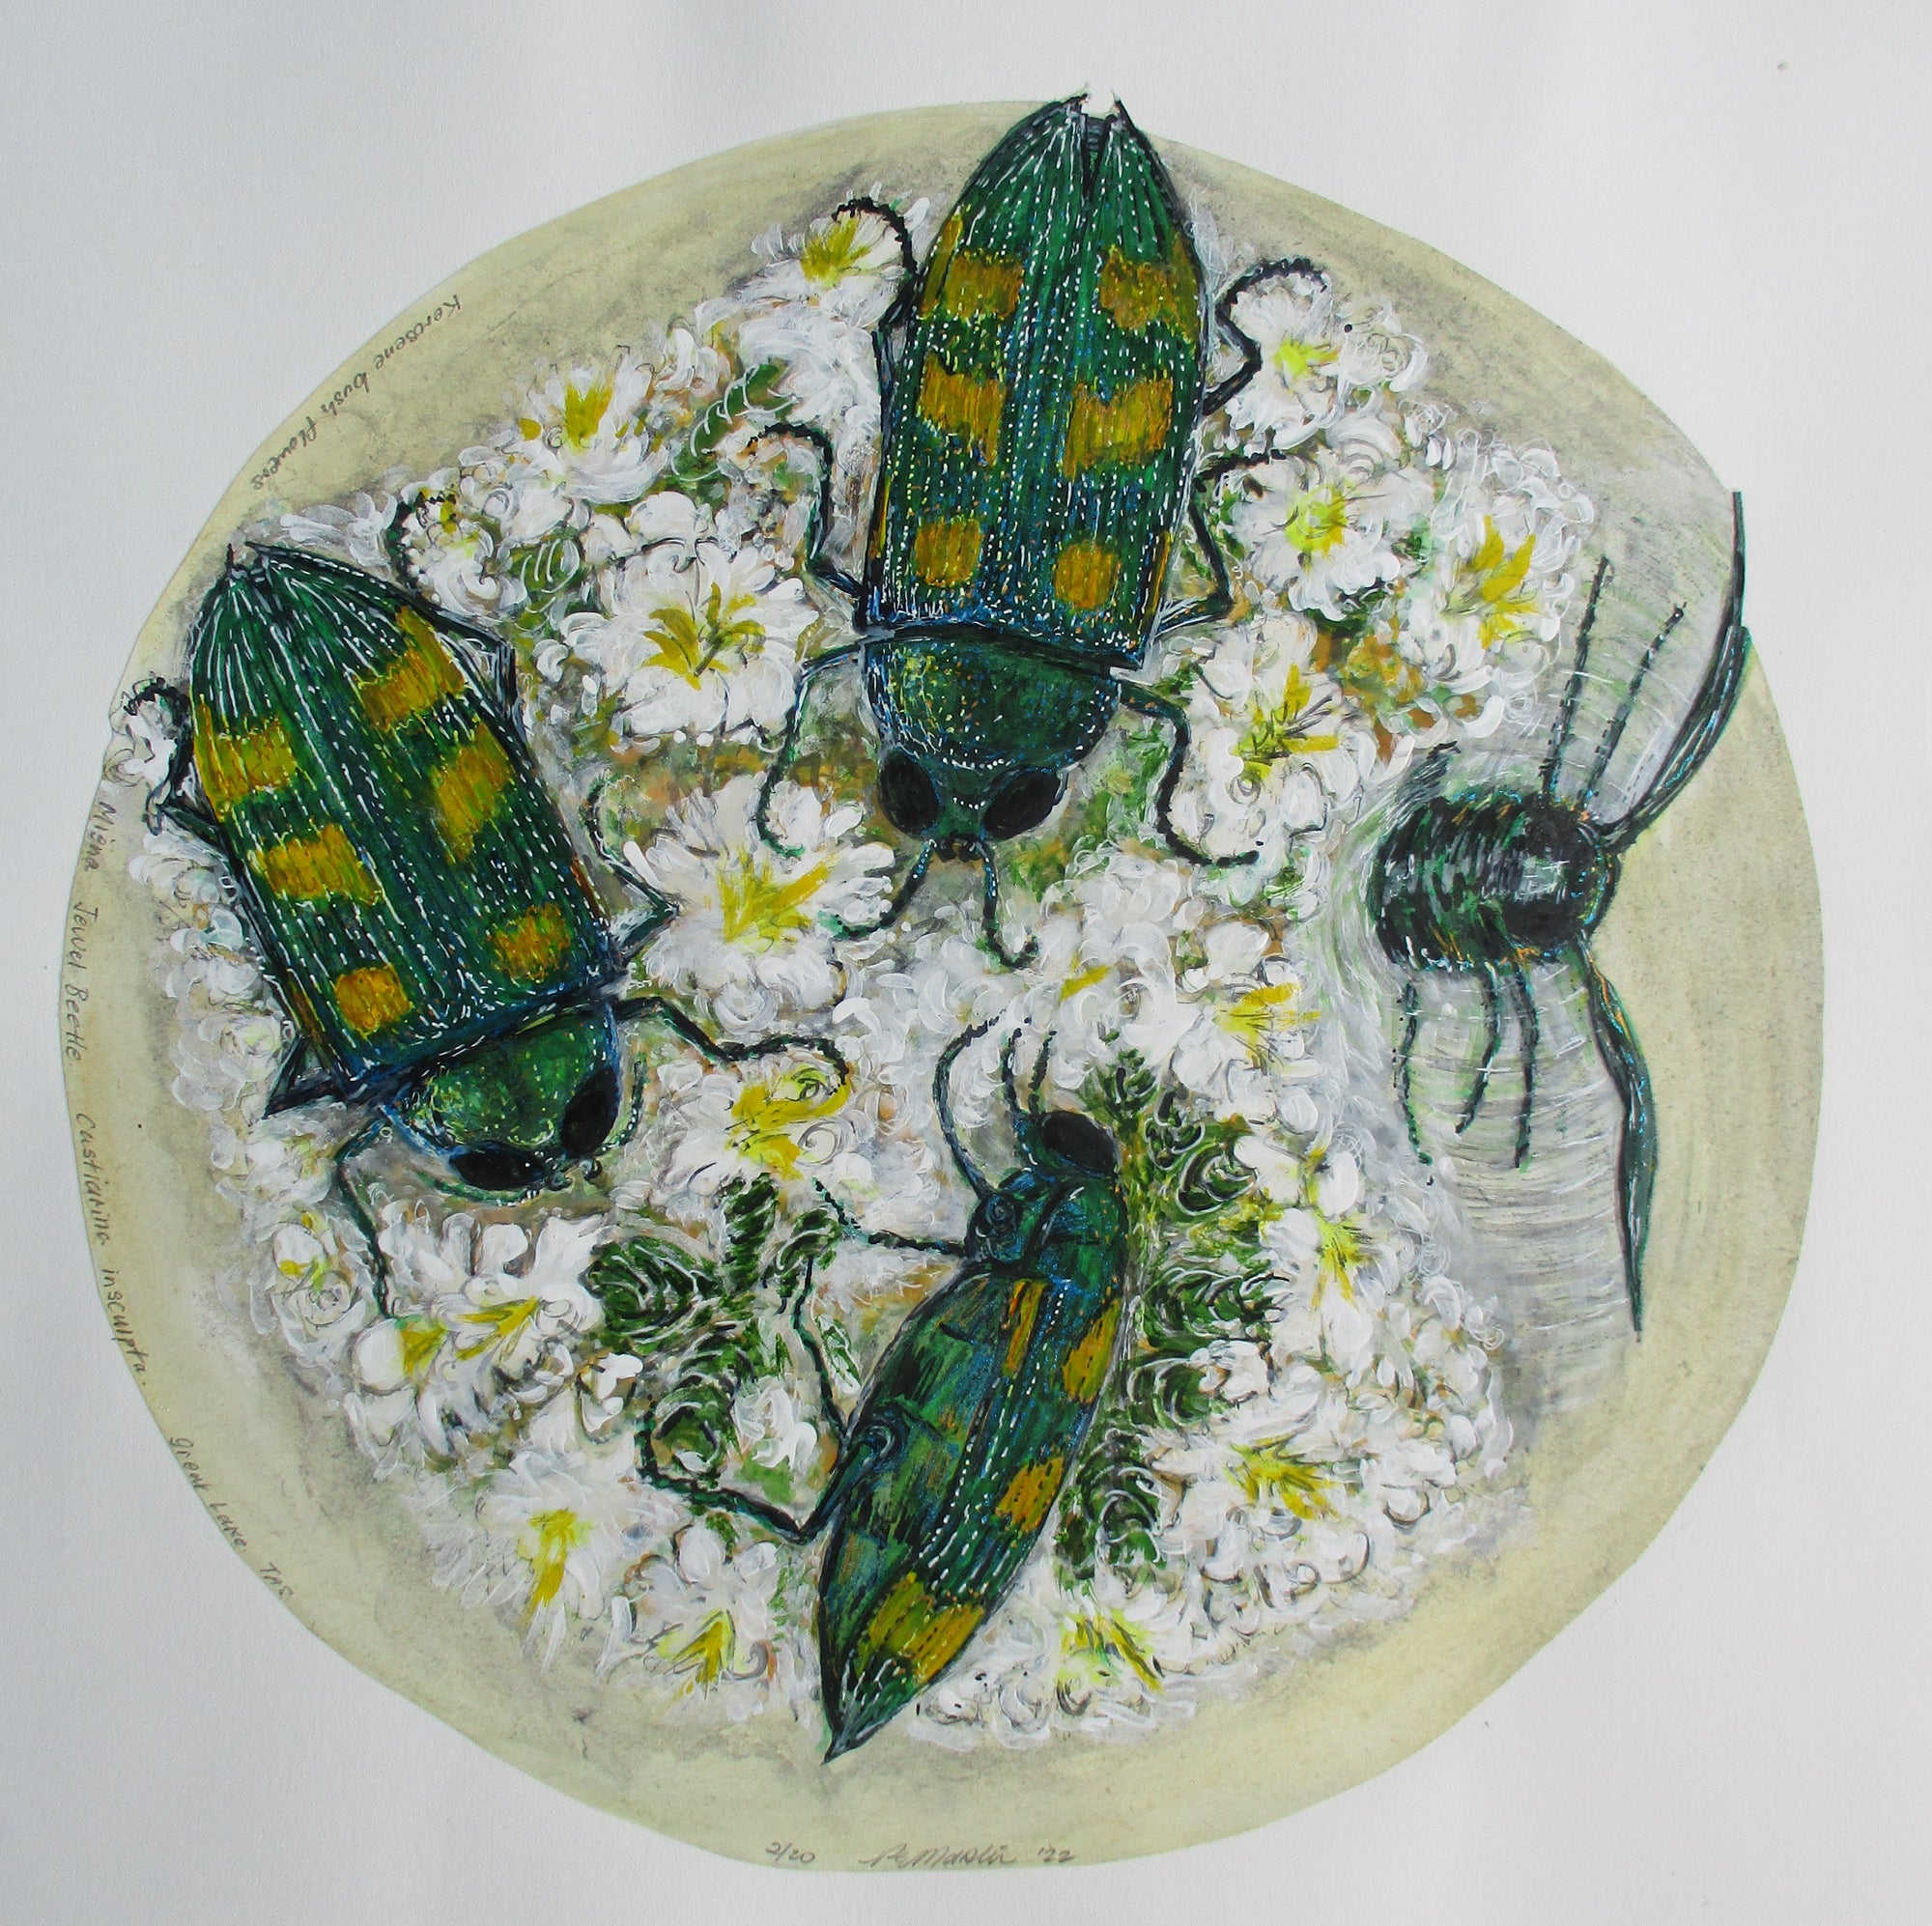 Patricia Martin - Miena jewel beetle